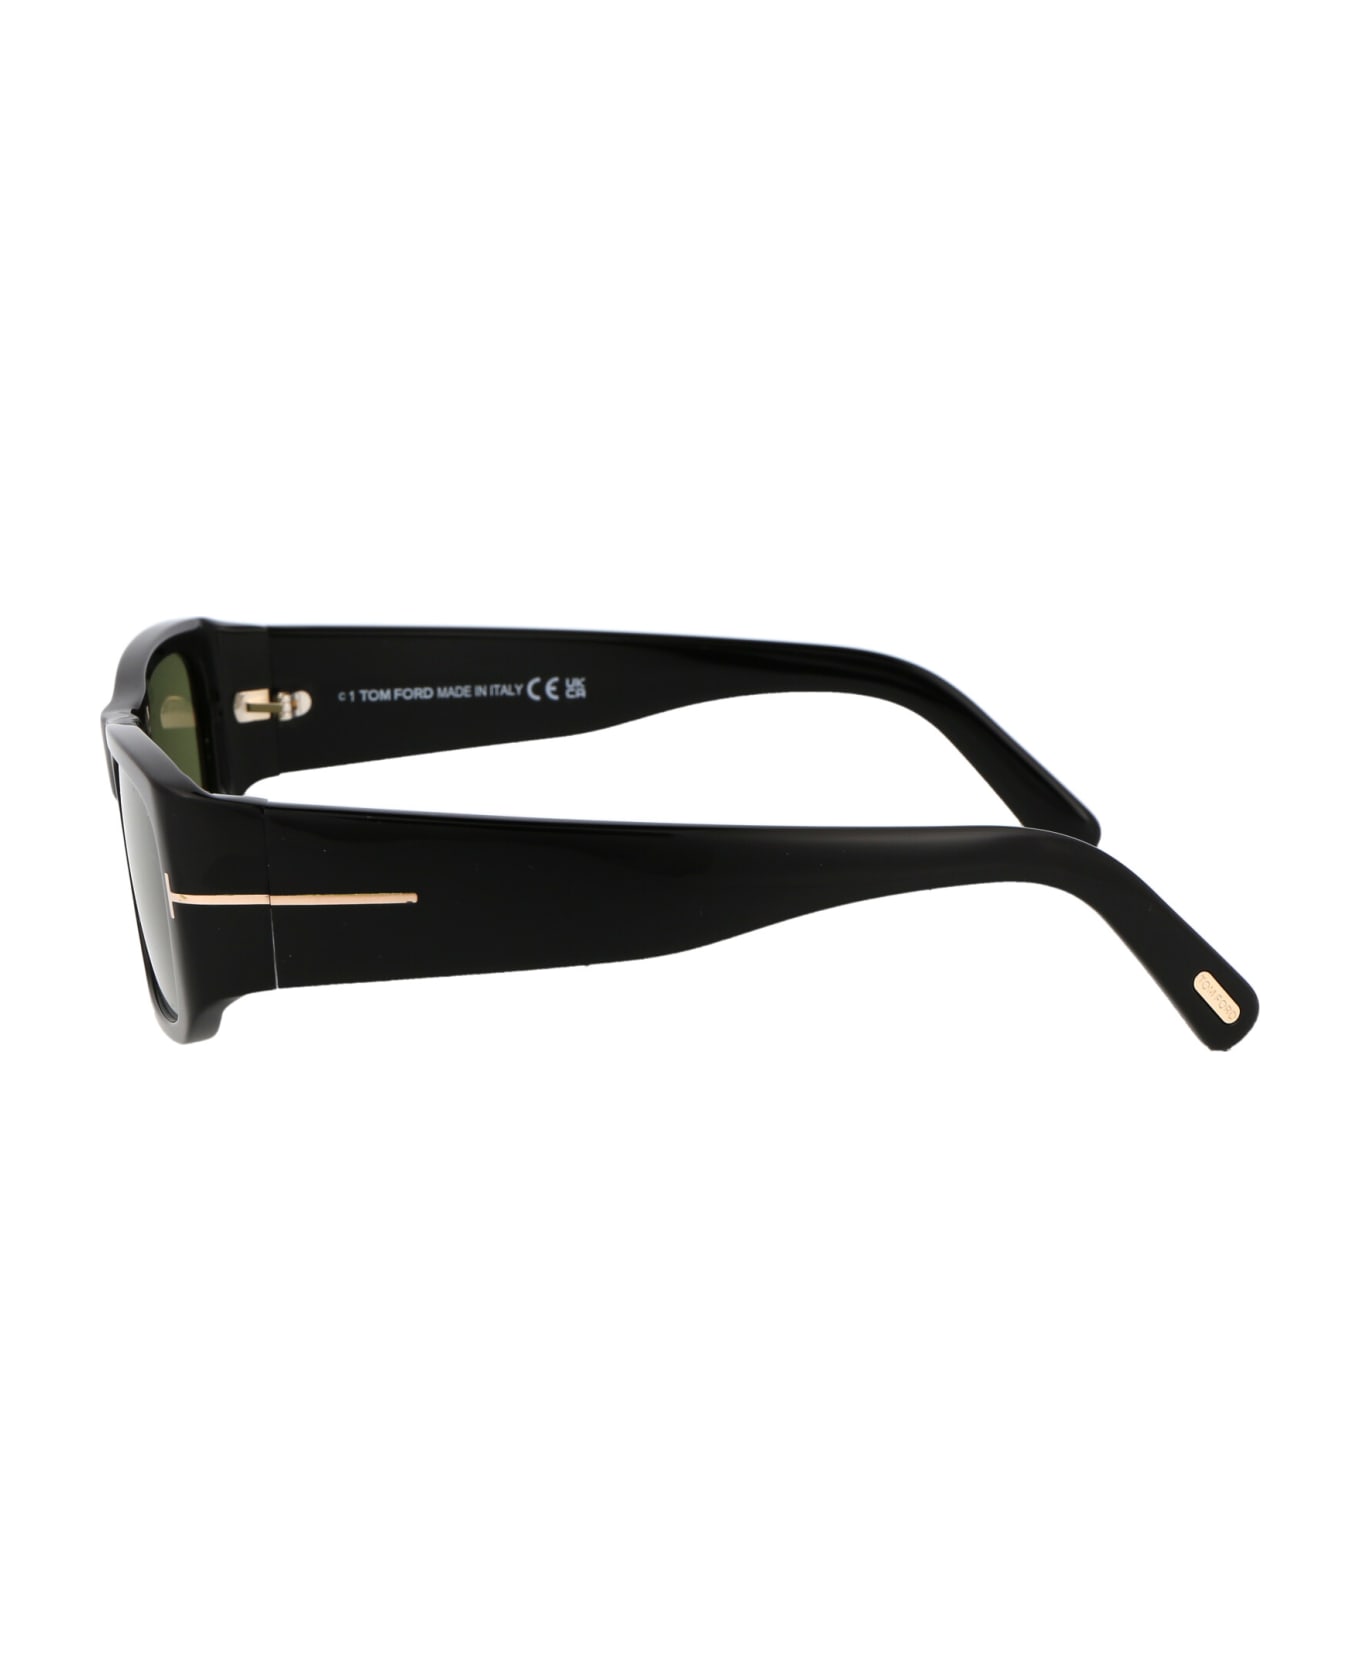 Tom Ford Eyewear Andres-02 Sunglasses - 01tortoiseshell-trim aviator sunglasses